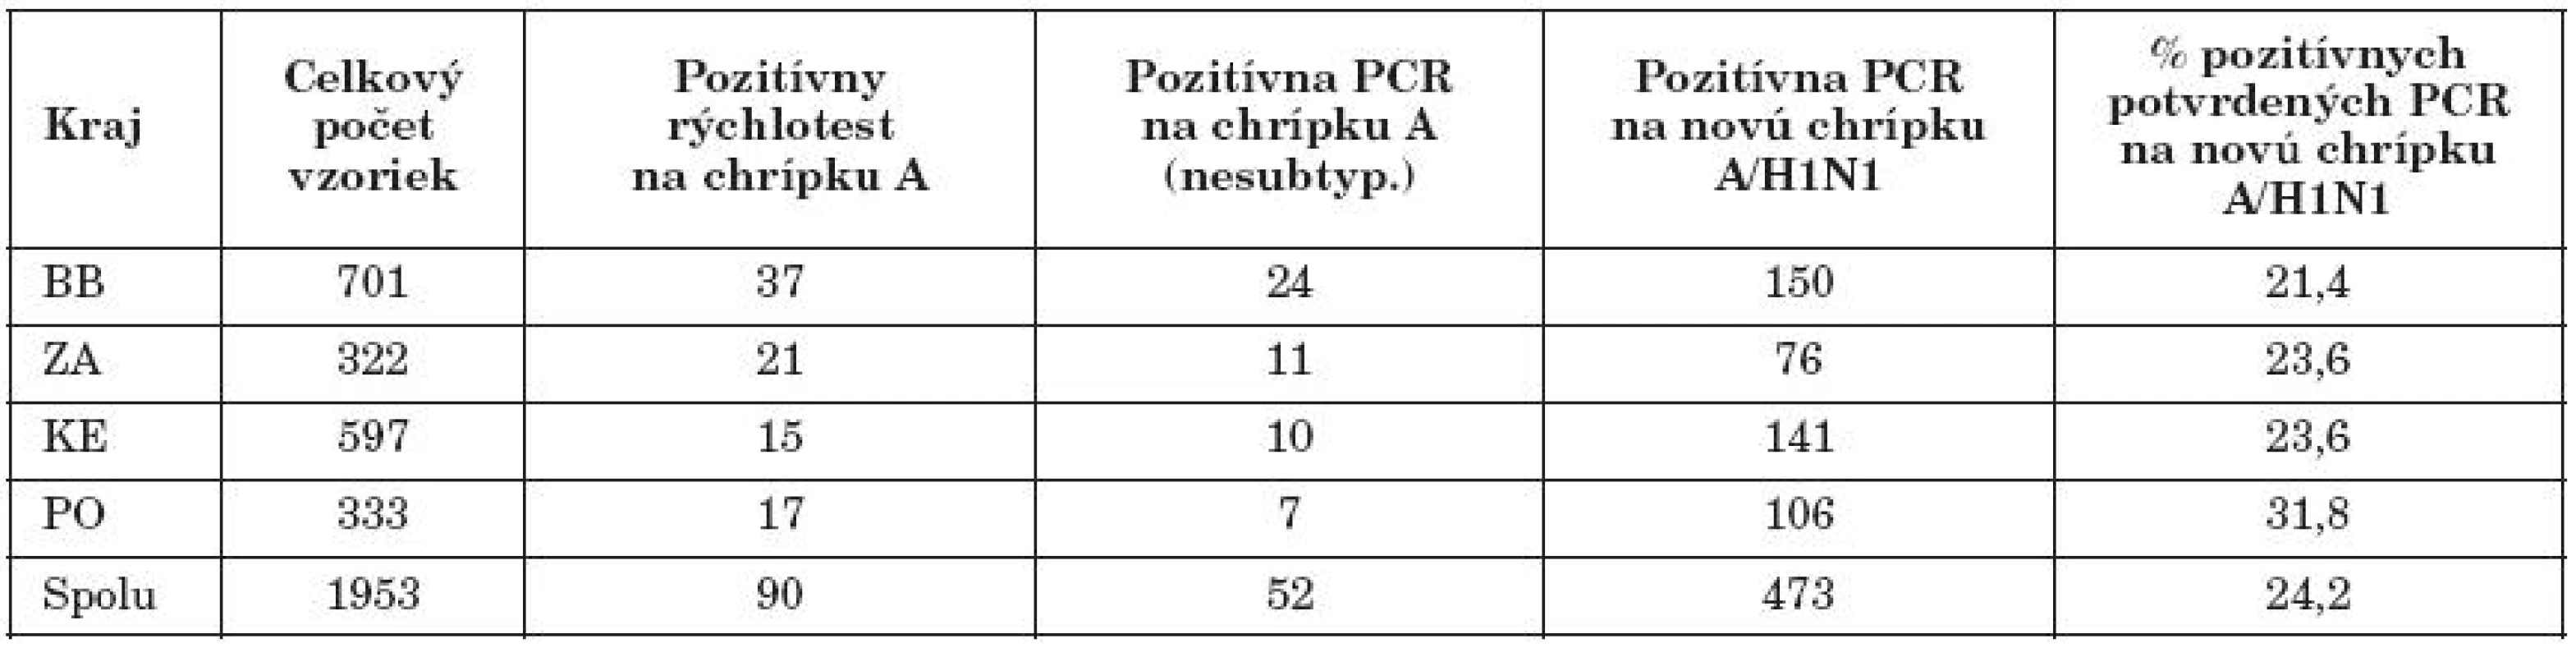 Virologická diagnostika pandemickej chrípky A/H1N1 na RÚVZ v BB – rok 2009

Table 2. Virological diagnosis of pandemic influenza A/H1N1 at the RAPH in Banská Bystrica – 2009